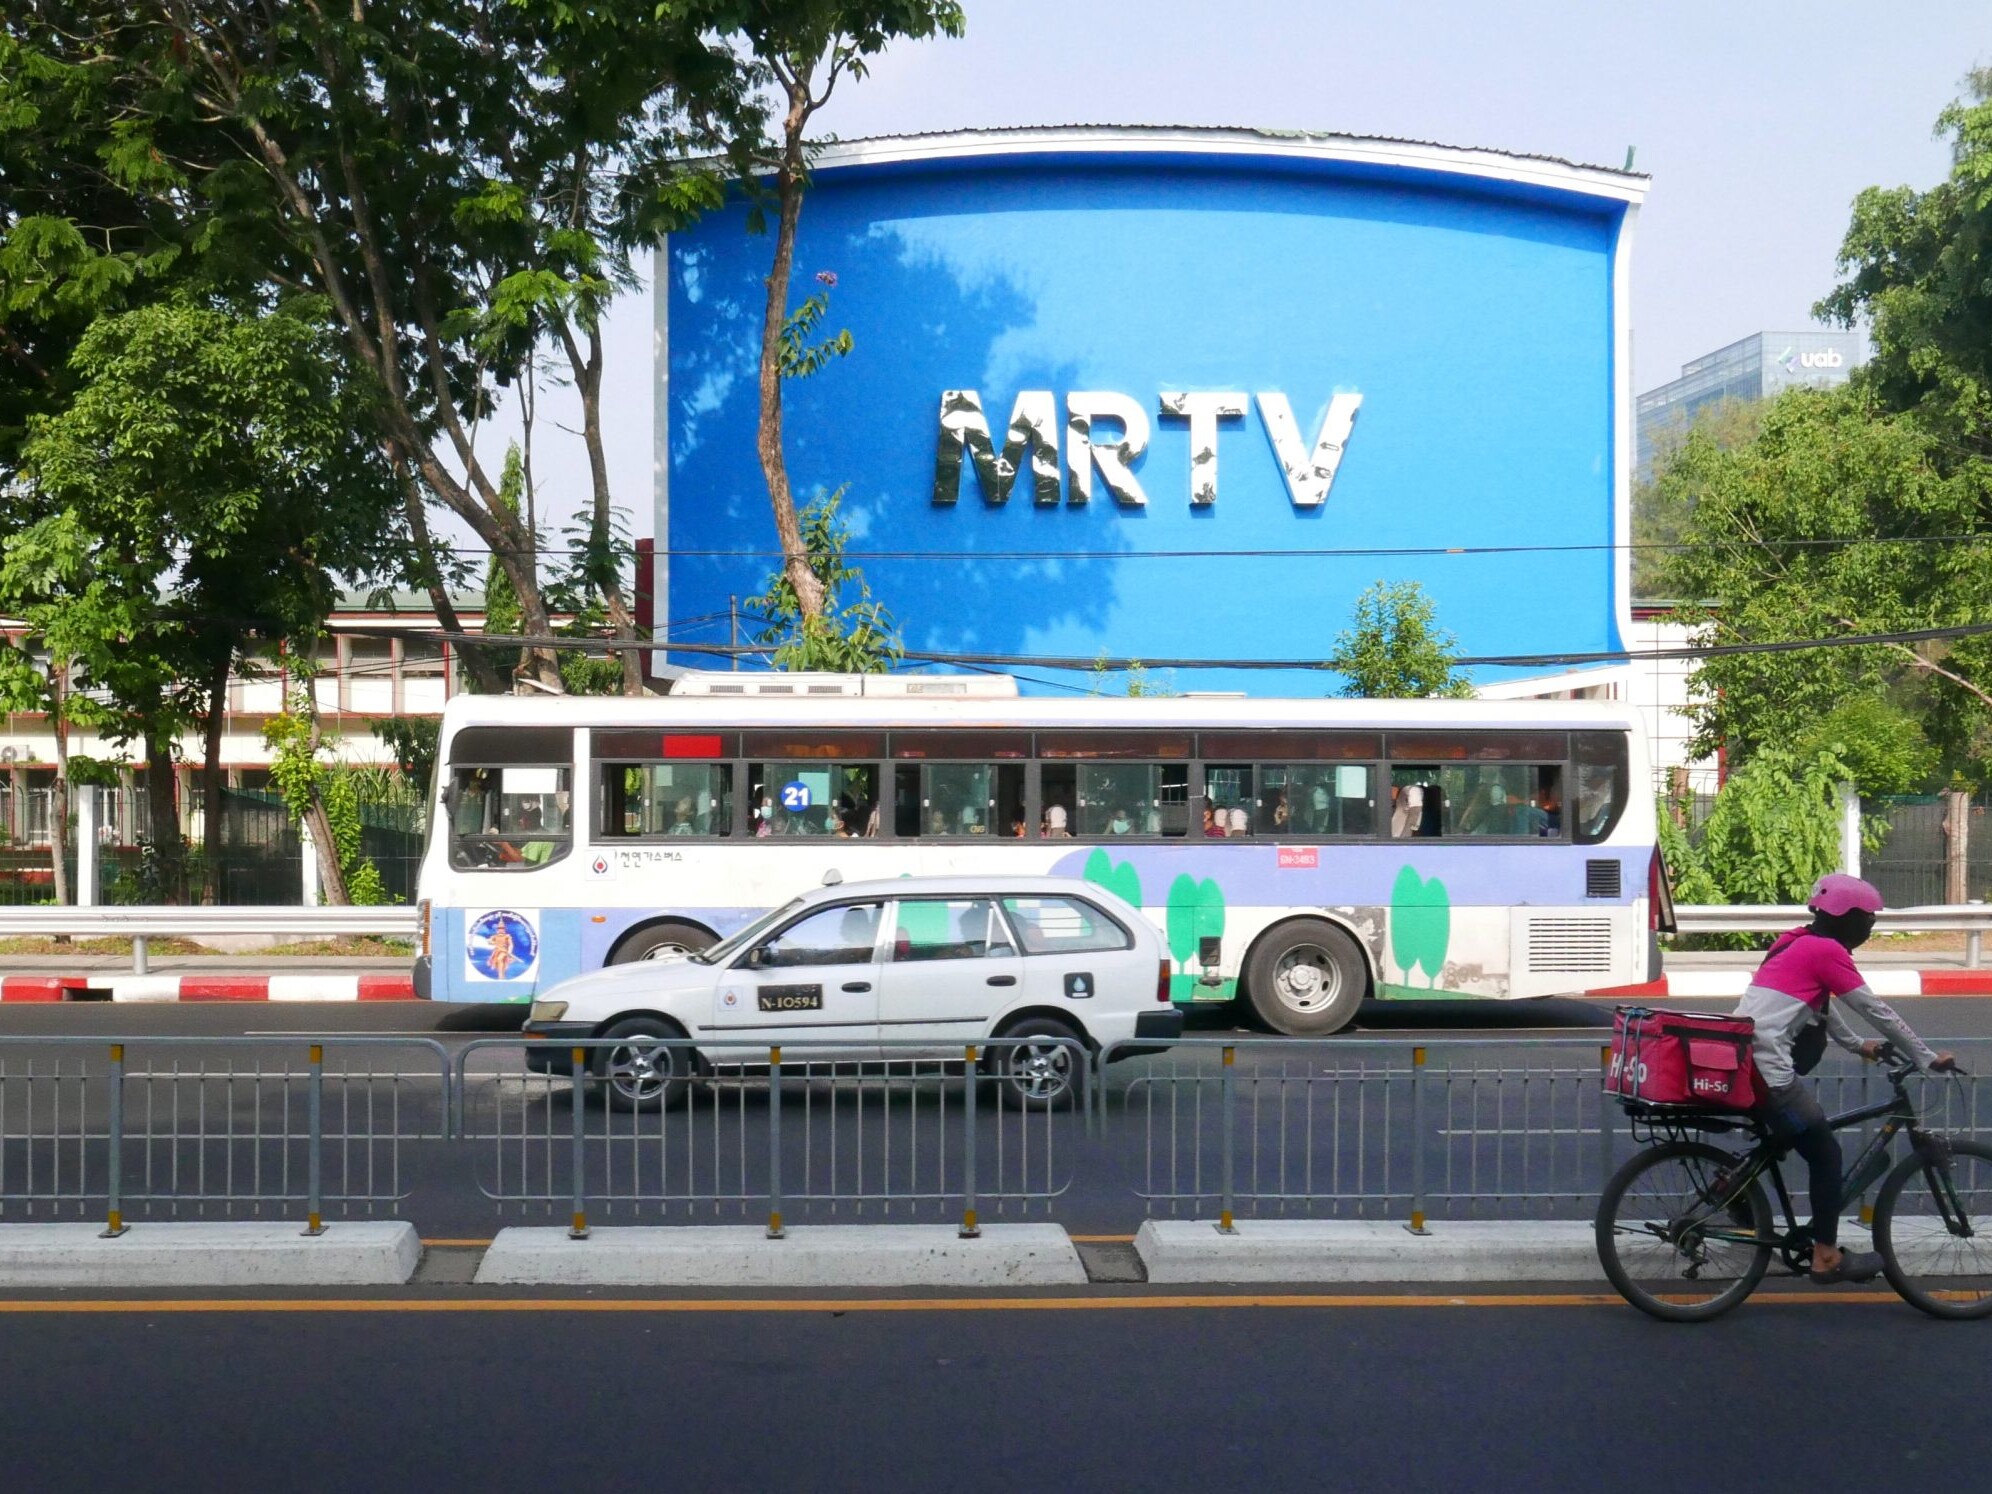 MRTV broadcasting house